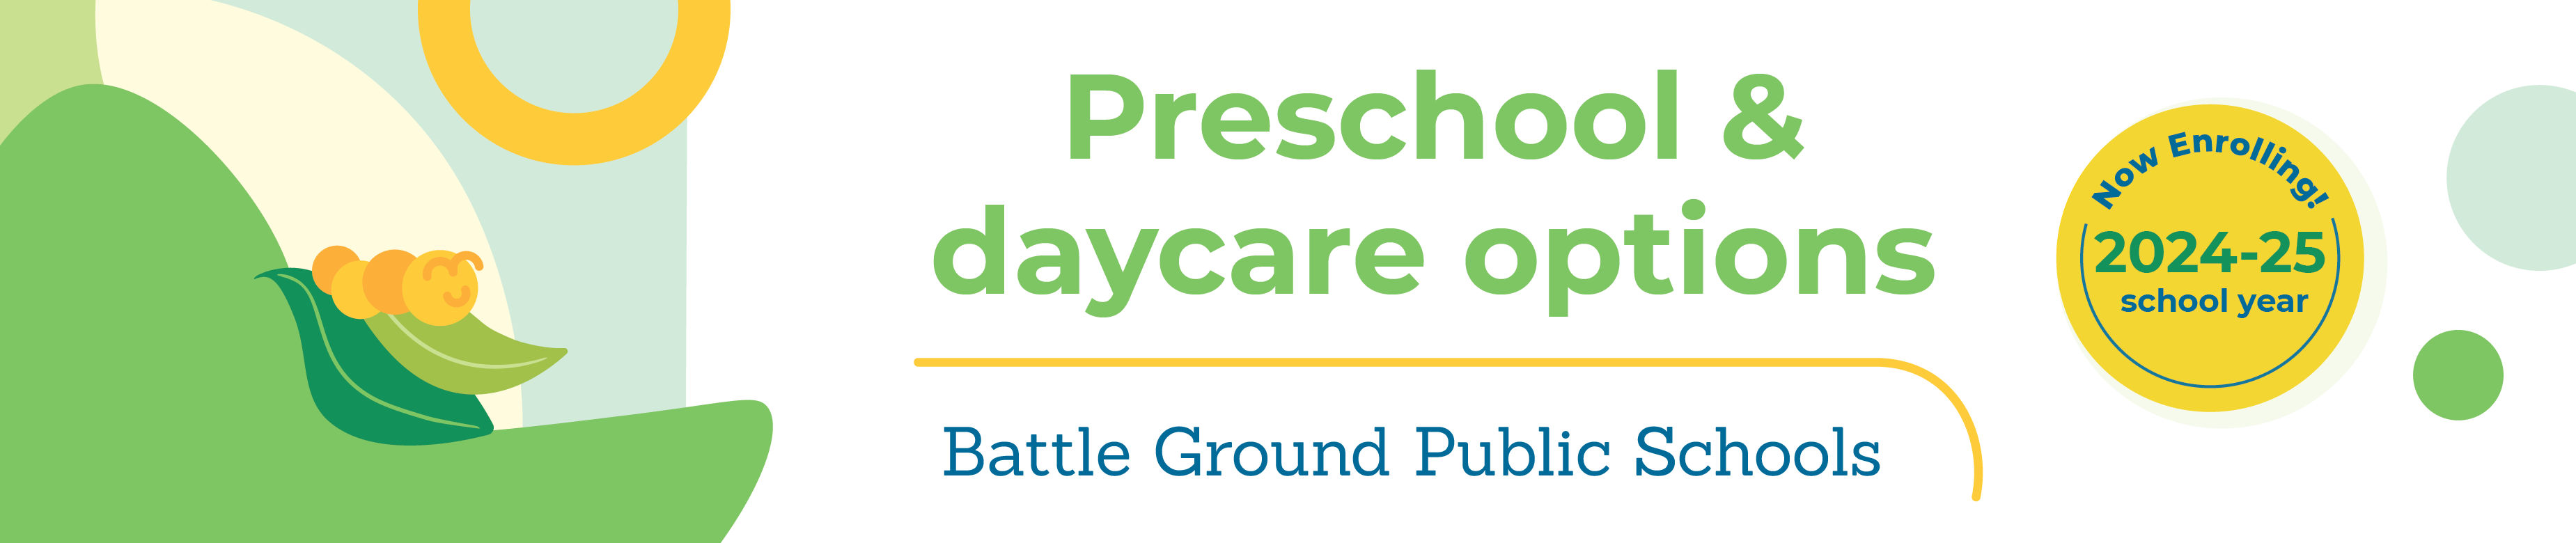 preschool & daycare options